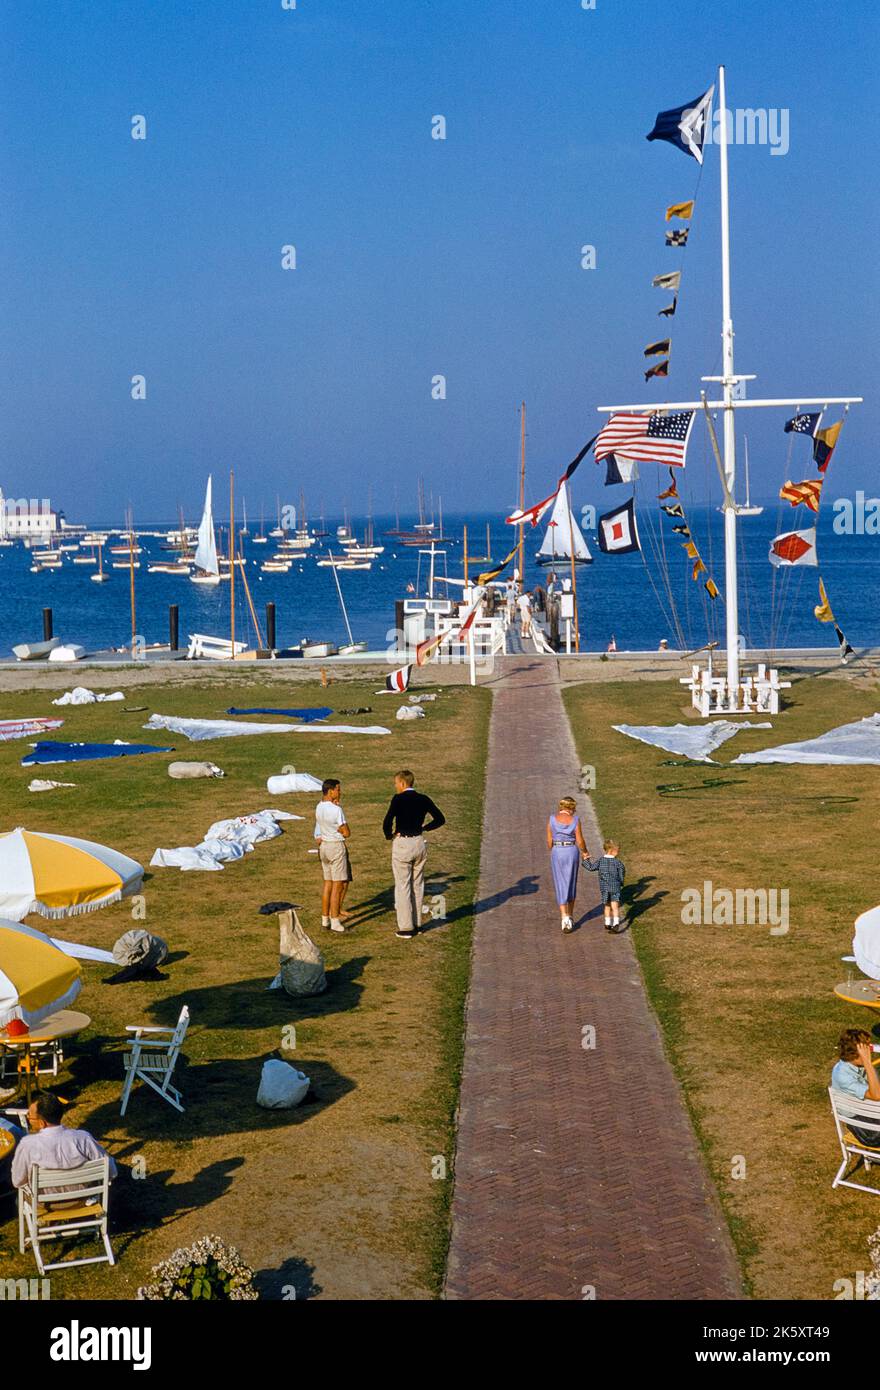 Harbor, Nantucket, Massachusetts, EE.UU., Toni Frissell Collection, Agosto 1957 Foto de stock